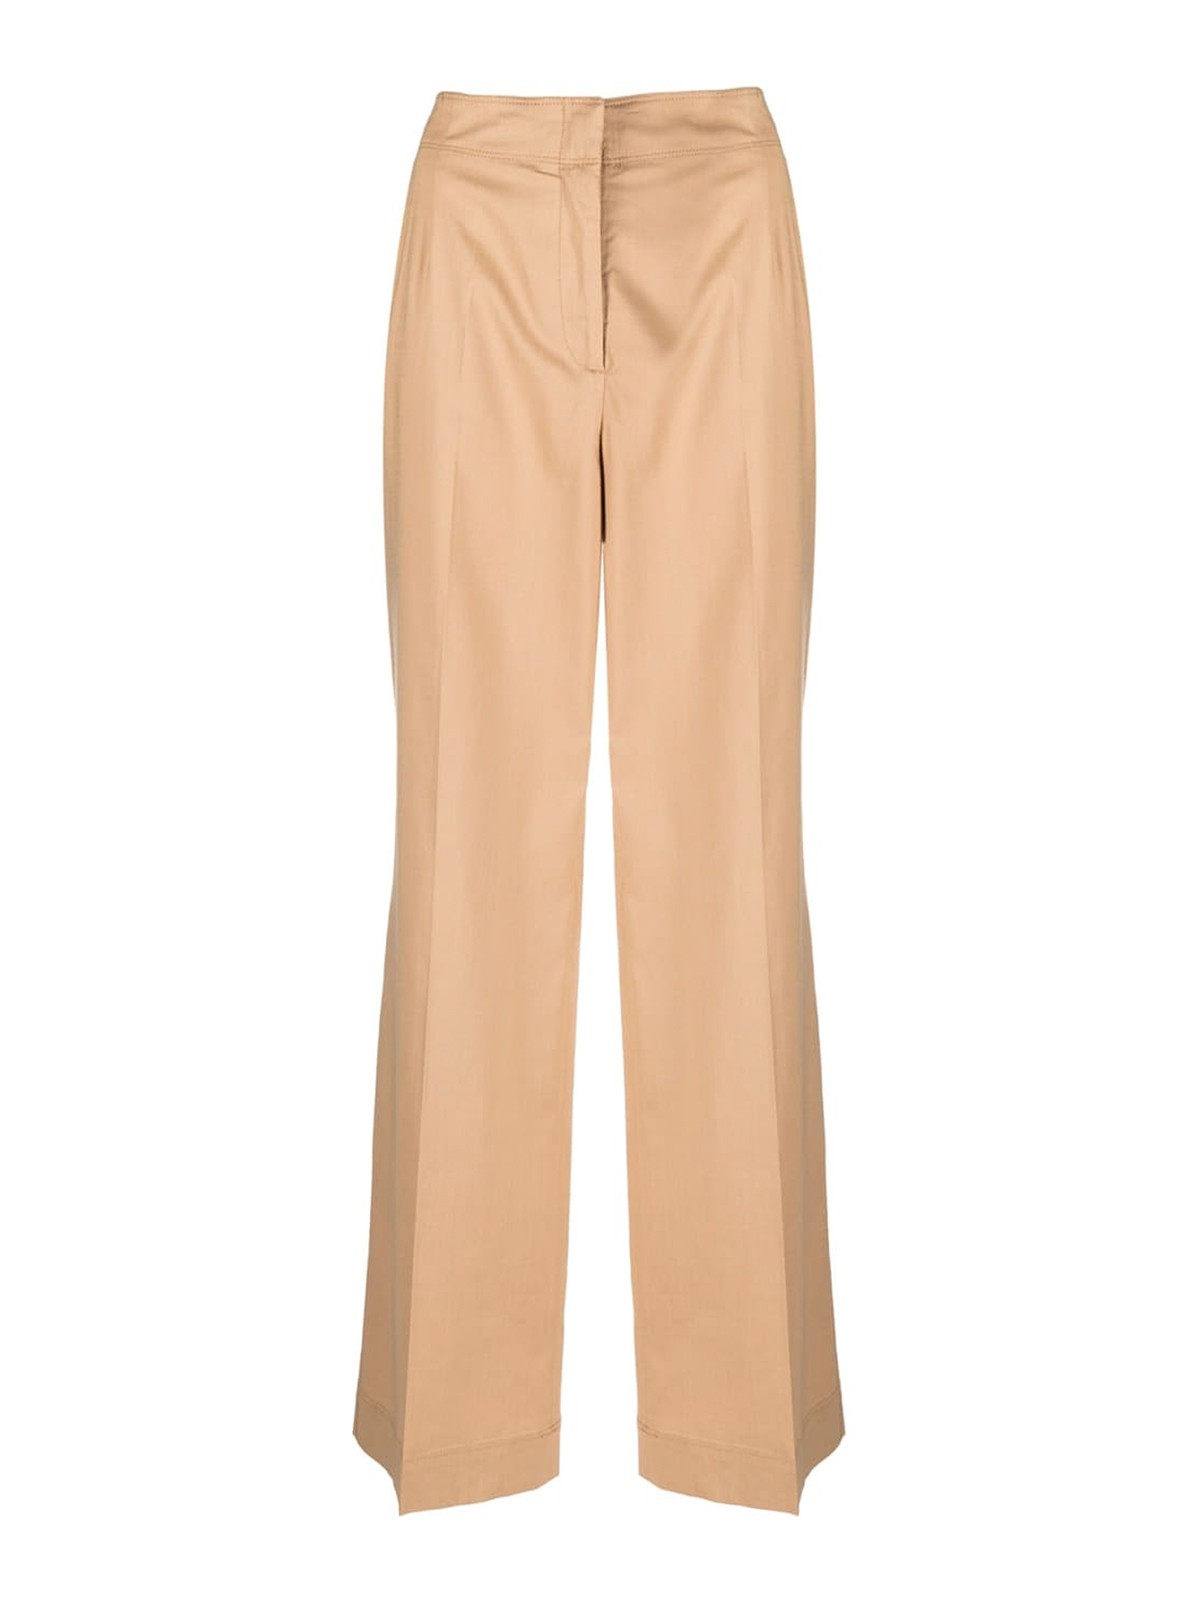 Calvin Klein Mens Slim Fit Taupe Herringbone Flat Front Wool Dress Pants |  The Suit Depot